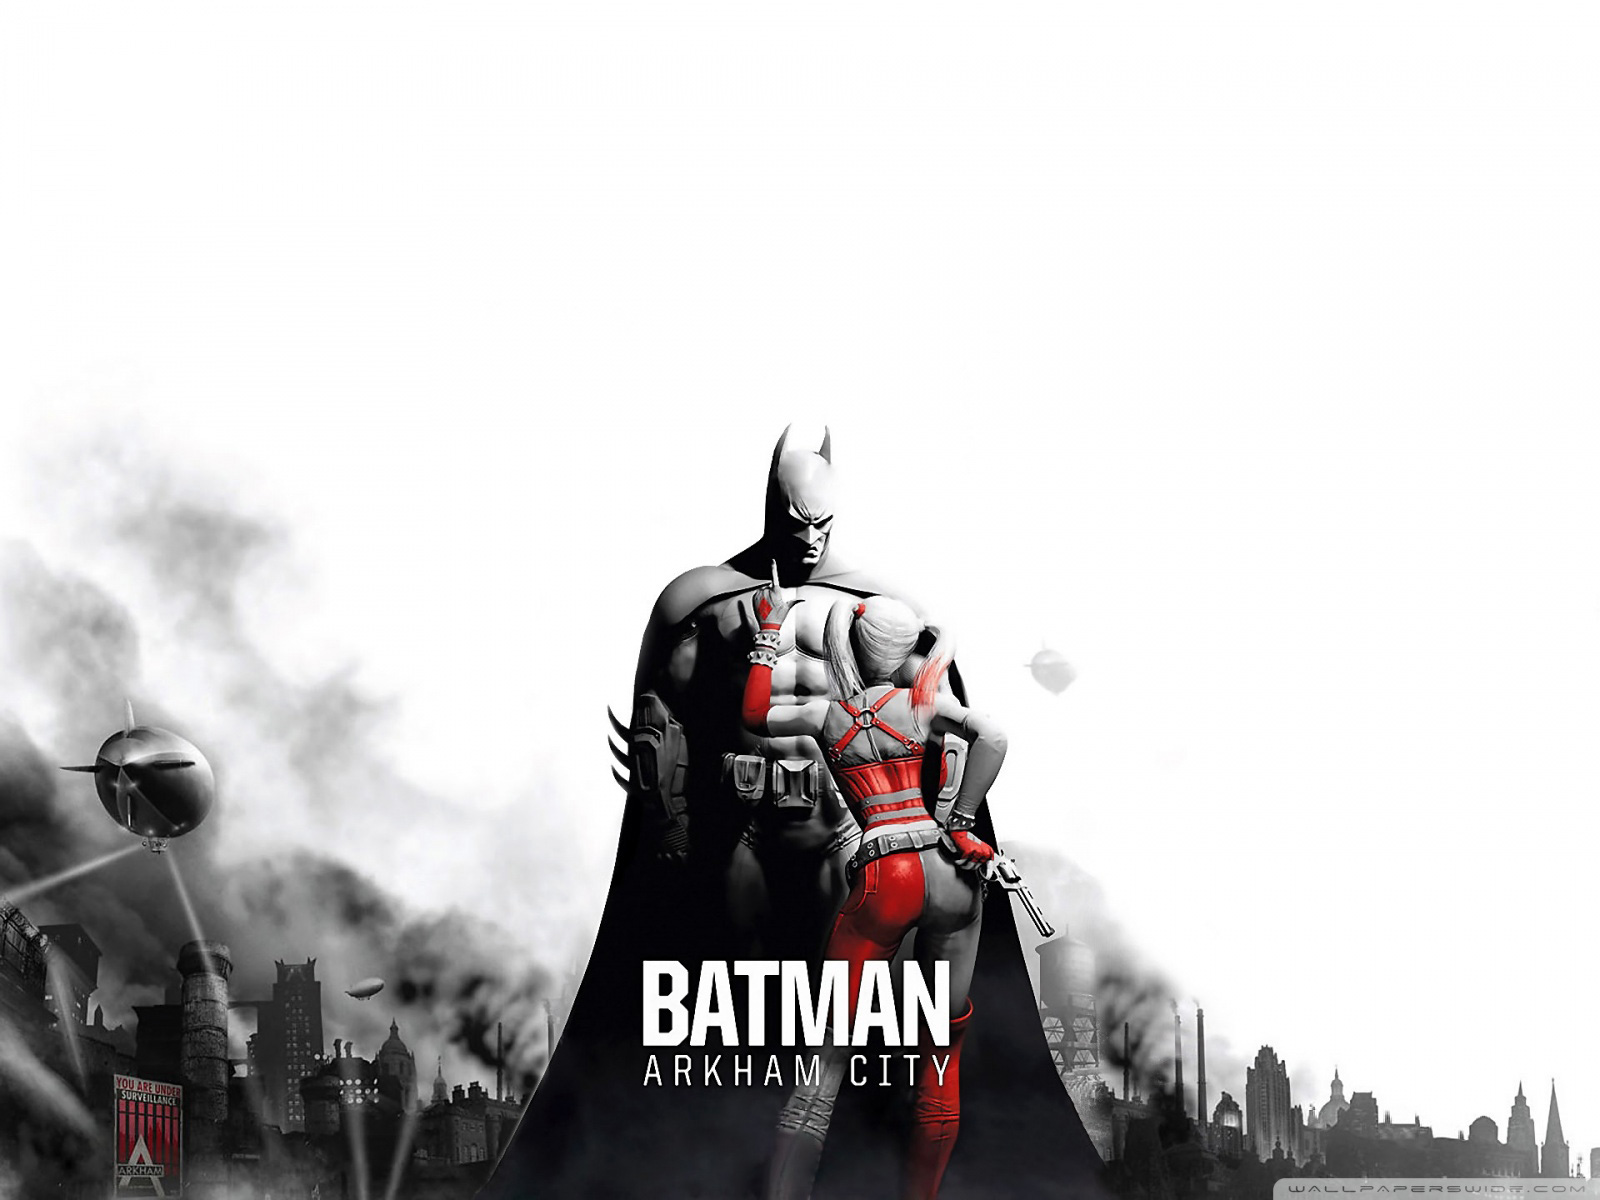 Batman Arkham City Wallpaper Pack - Freeware - EN - download.chip.eu